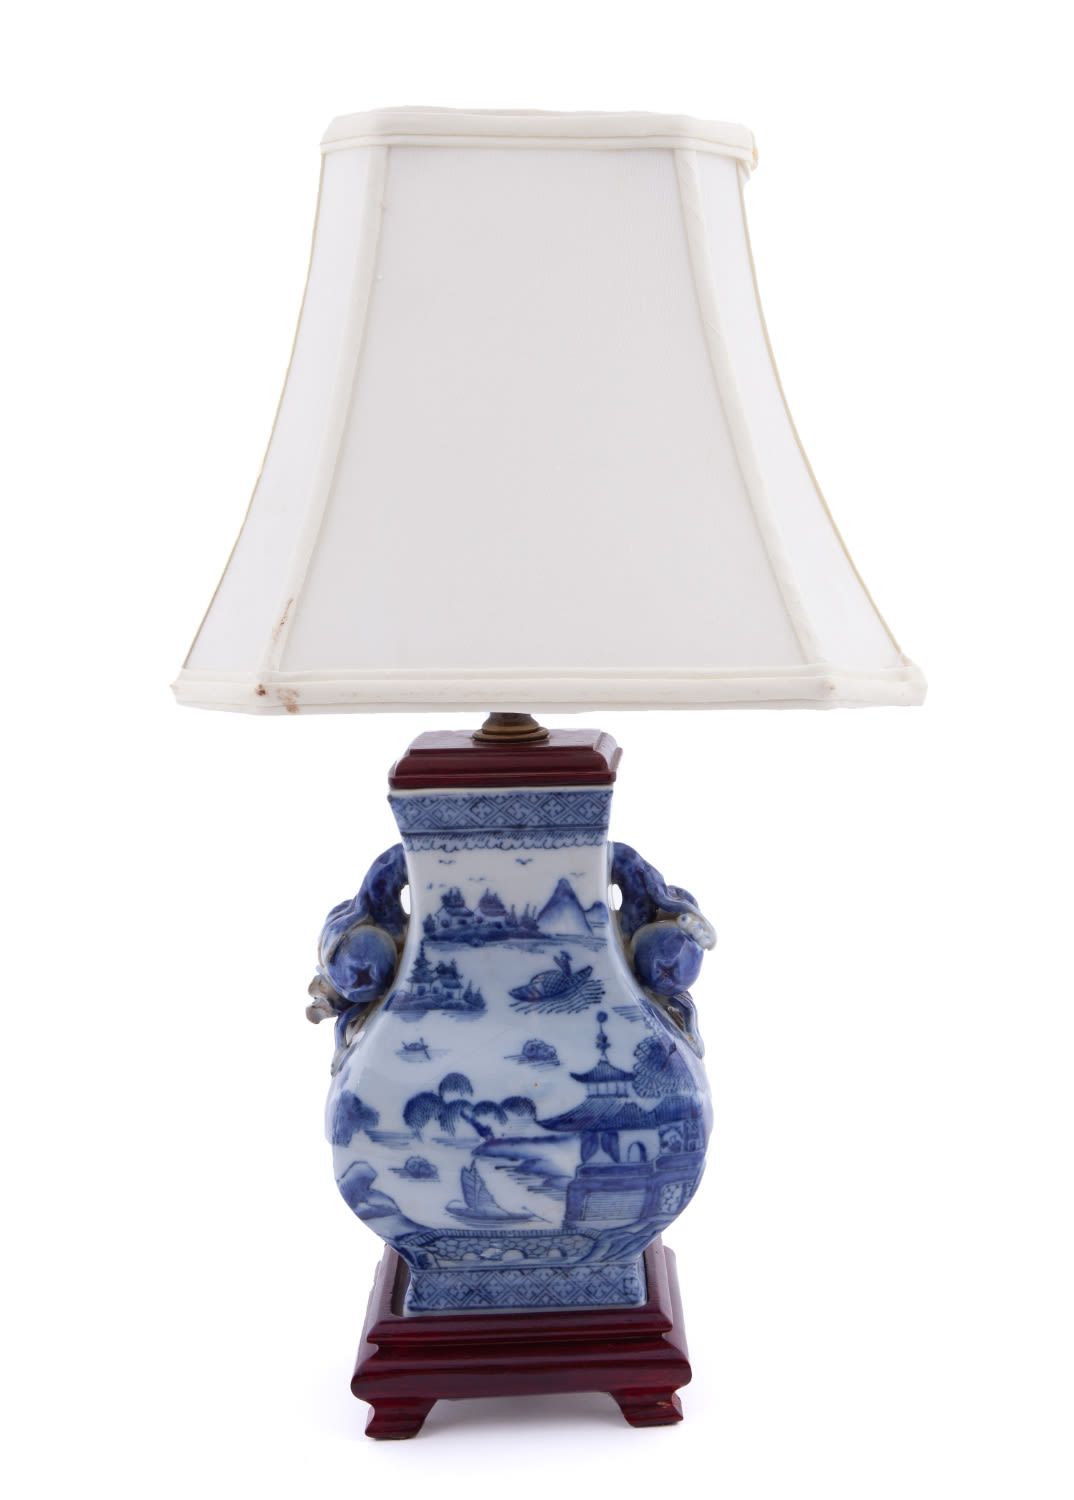 Blue Willow Porcelain Lamp on Wooden Base Handbemalte Porzellanlampe mit asiatis&hellip;